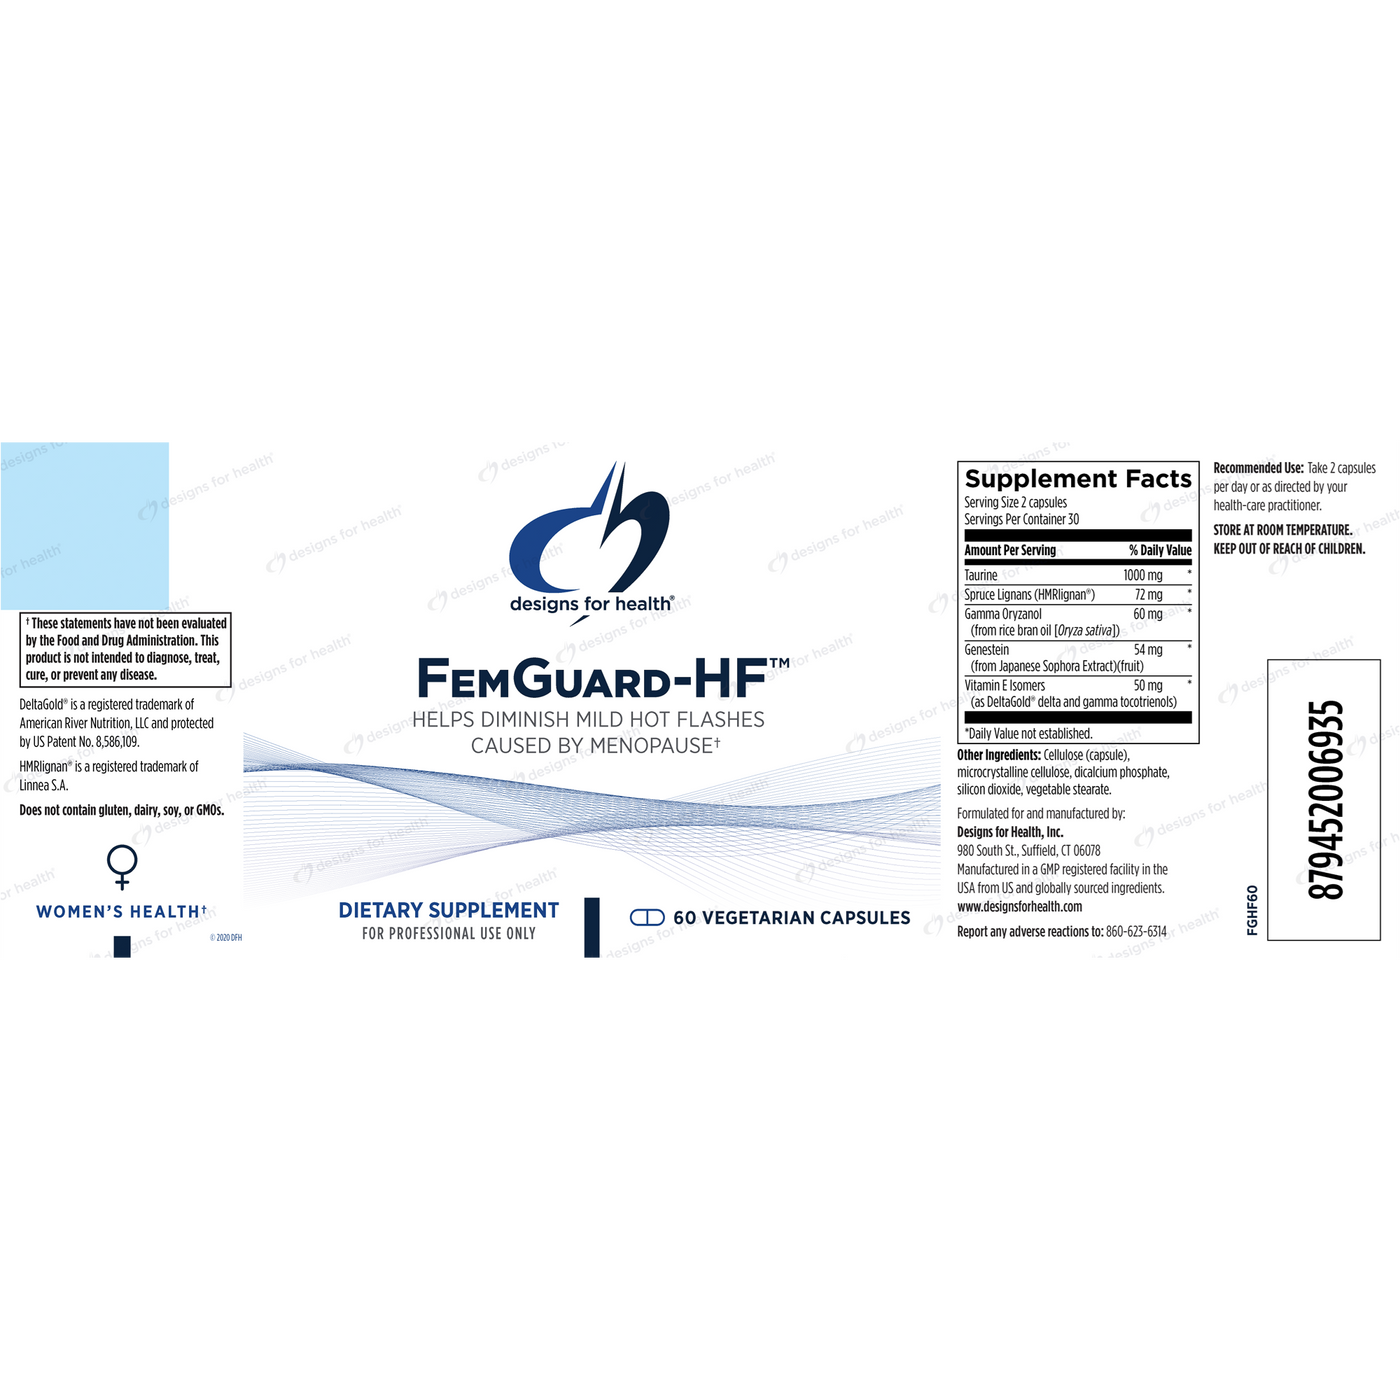 FemGuard-HF 60 vegcaps Curated Wellness